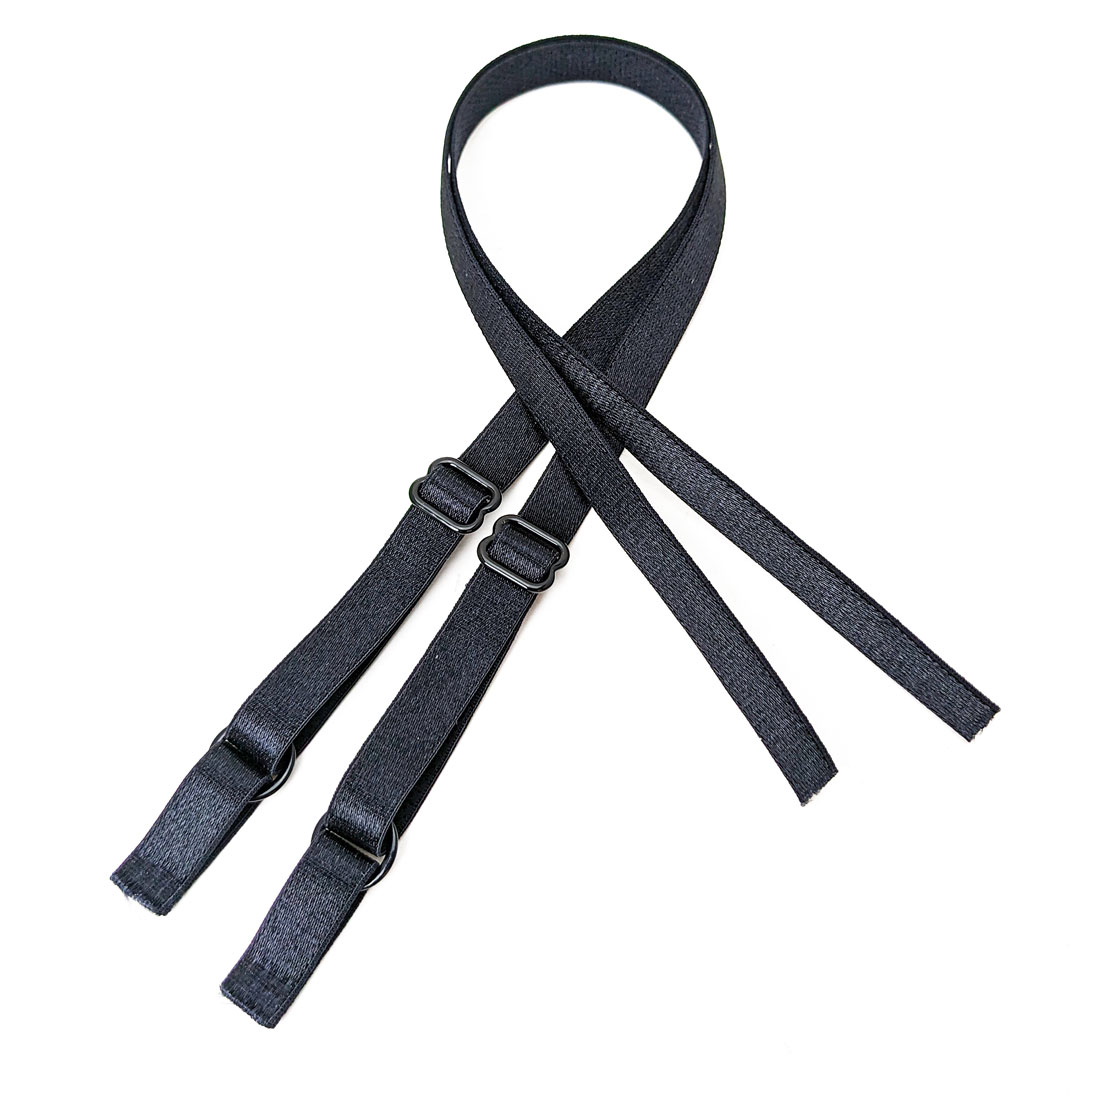 3/8 Adjustable Satin Bra Straps - Black from CorsetMakingSupplies.com